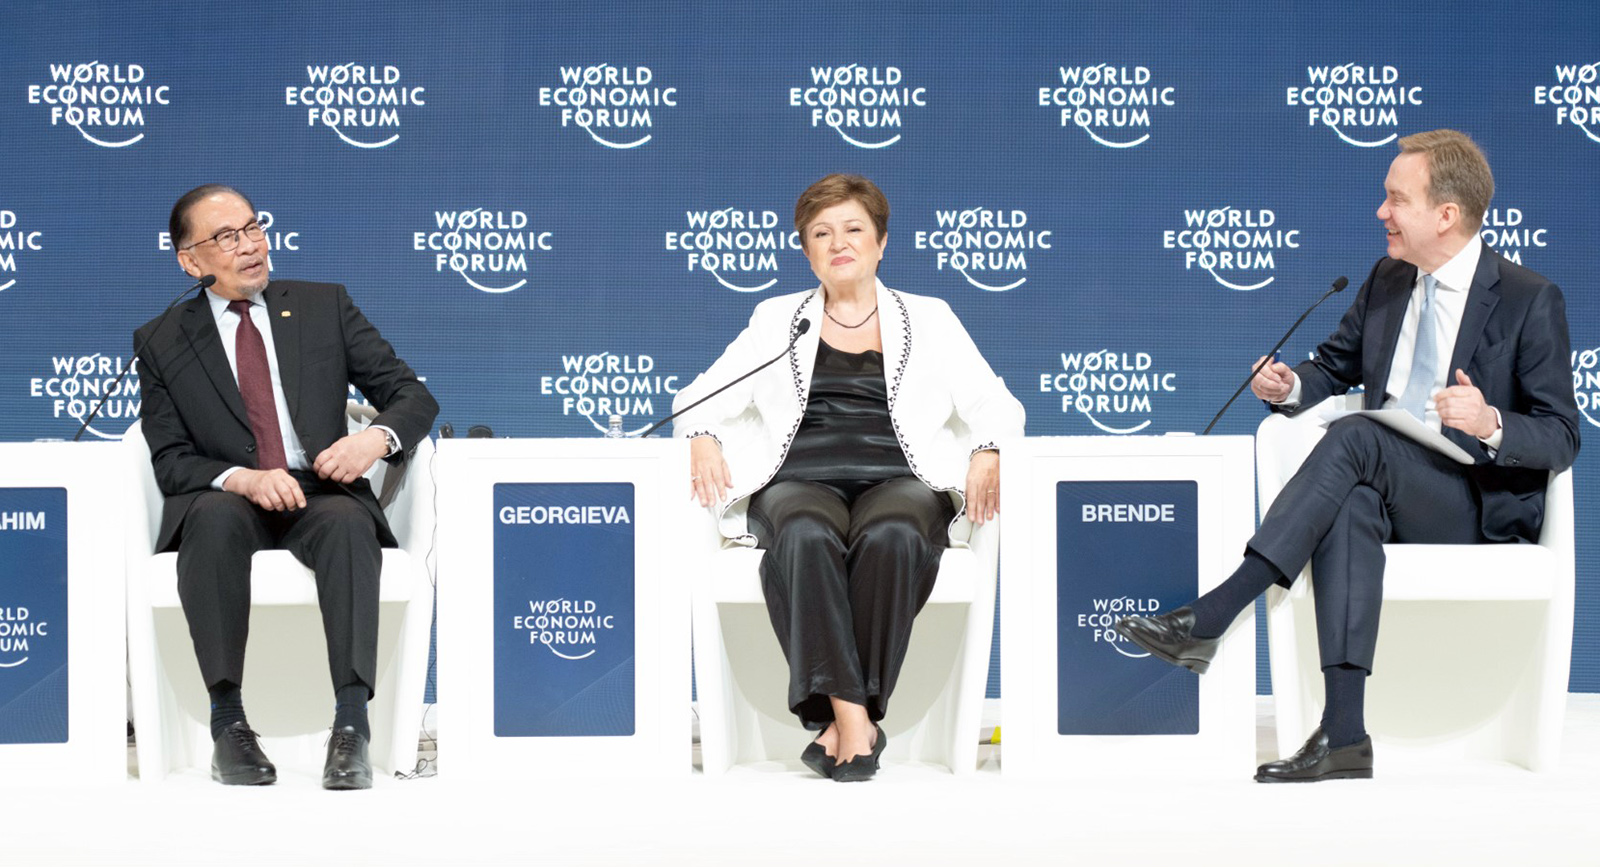 The International Monetary Fund's (IMF) Managing Director Kristalina Georgieva